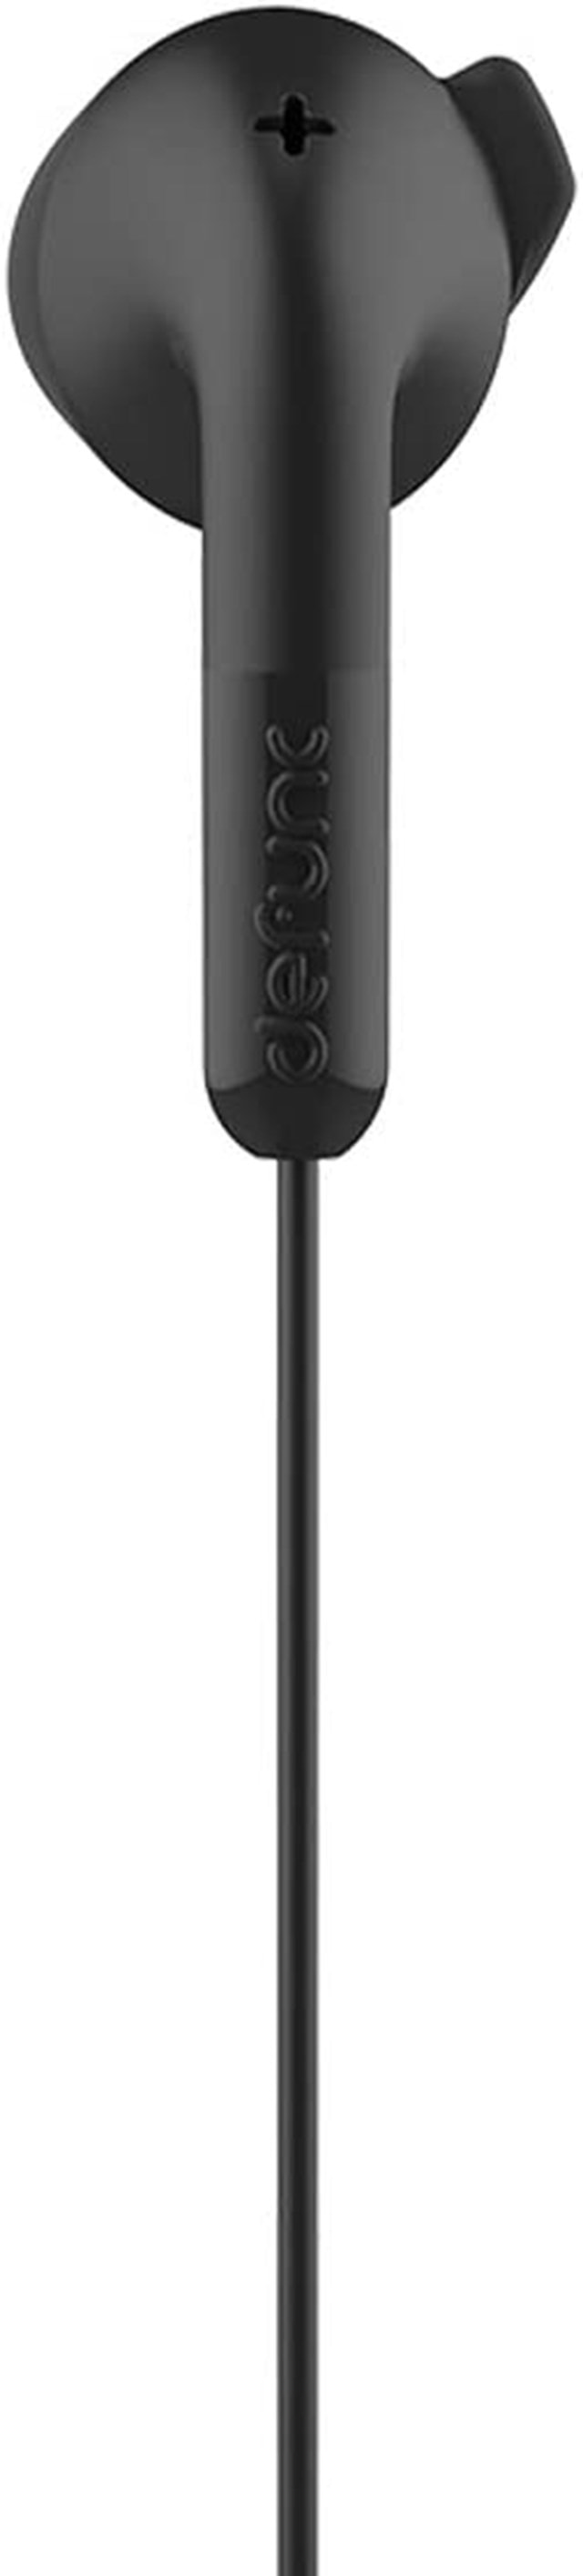 Defunc Earbud Go Hybrid Black Earphones W/Mic - 2